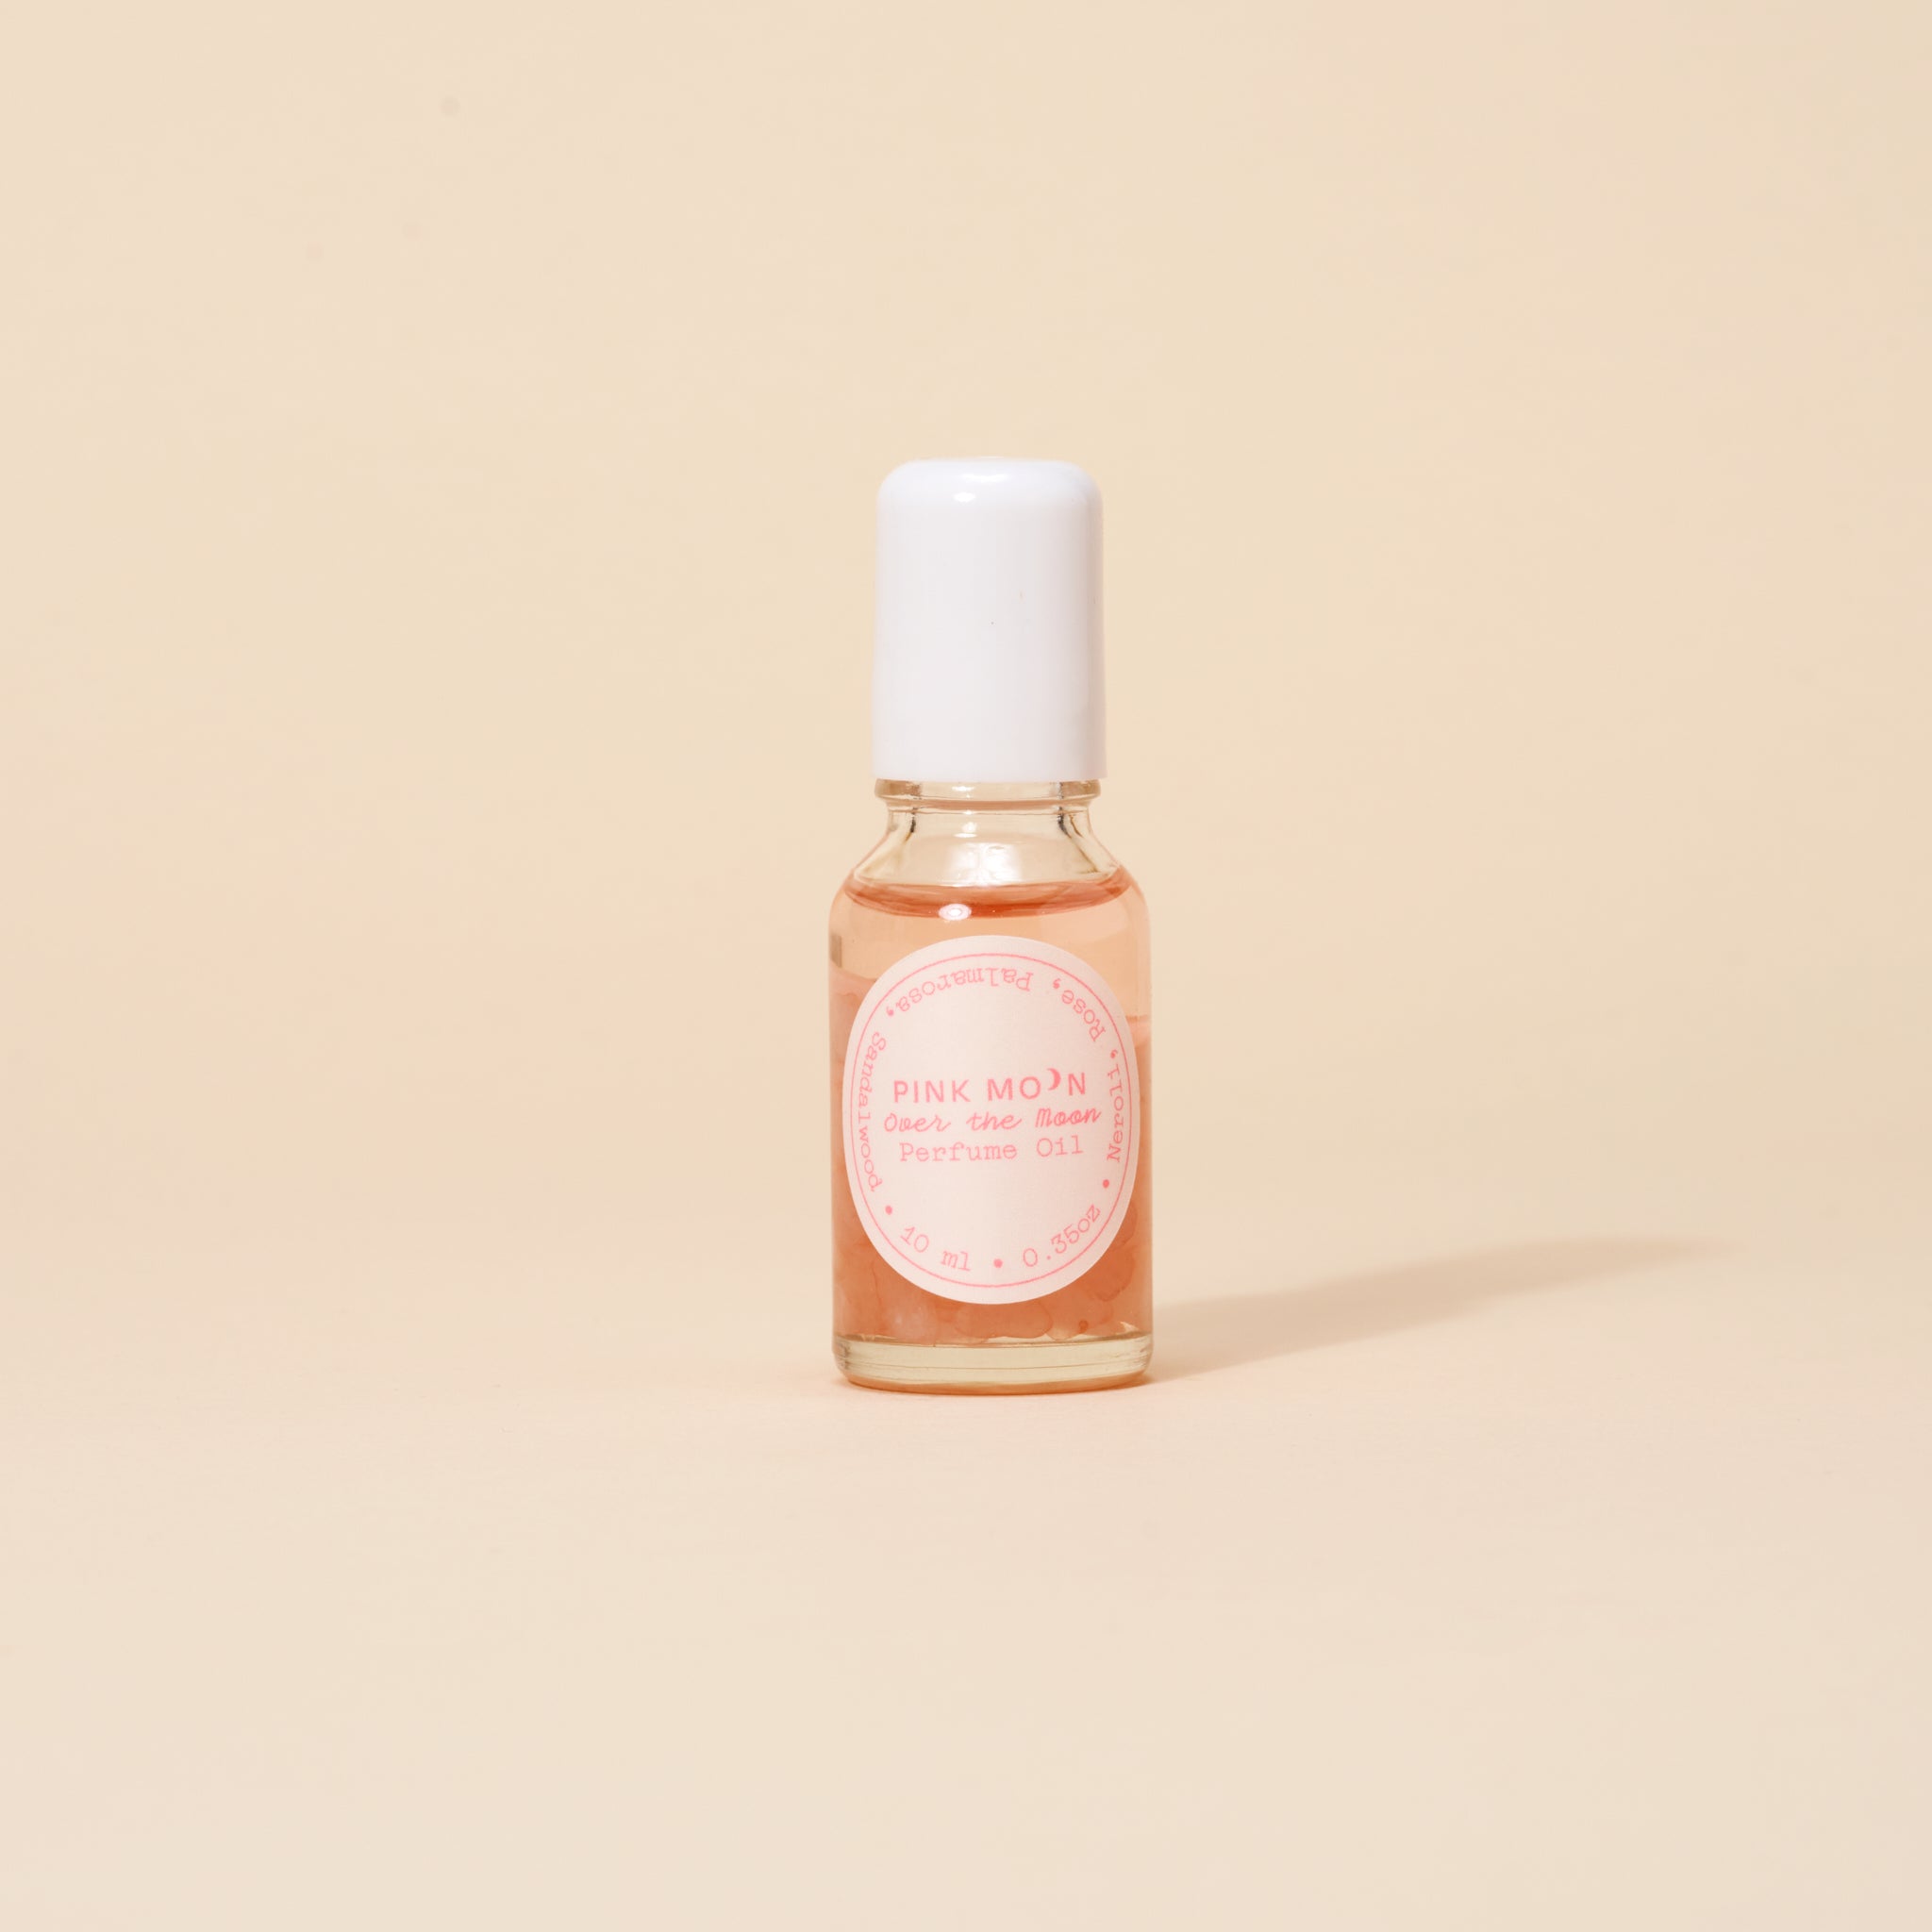 Over the Moon Aromatherapy Reiki Crystal Perfume Oil - Pink Moon